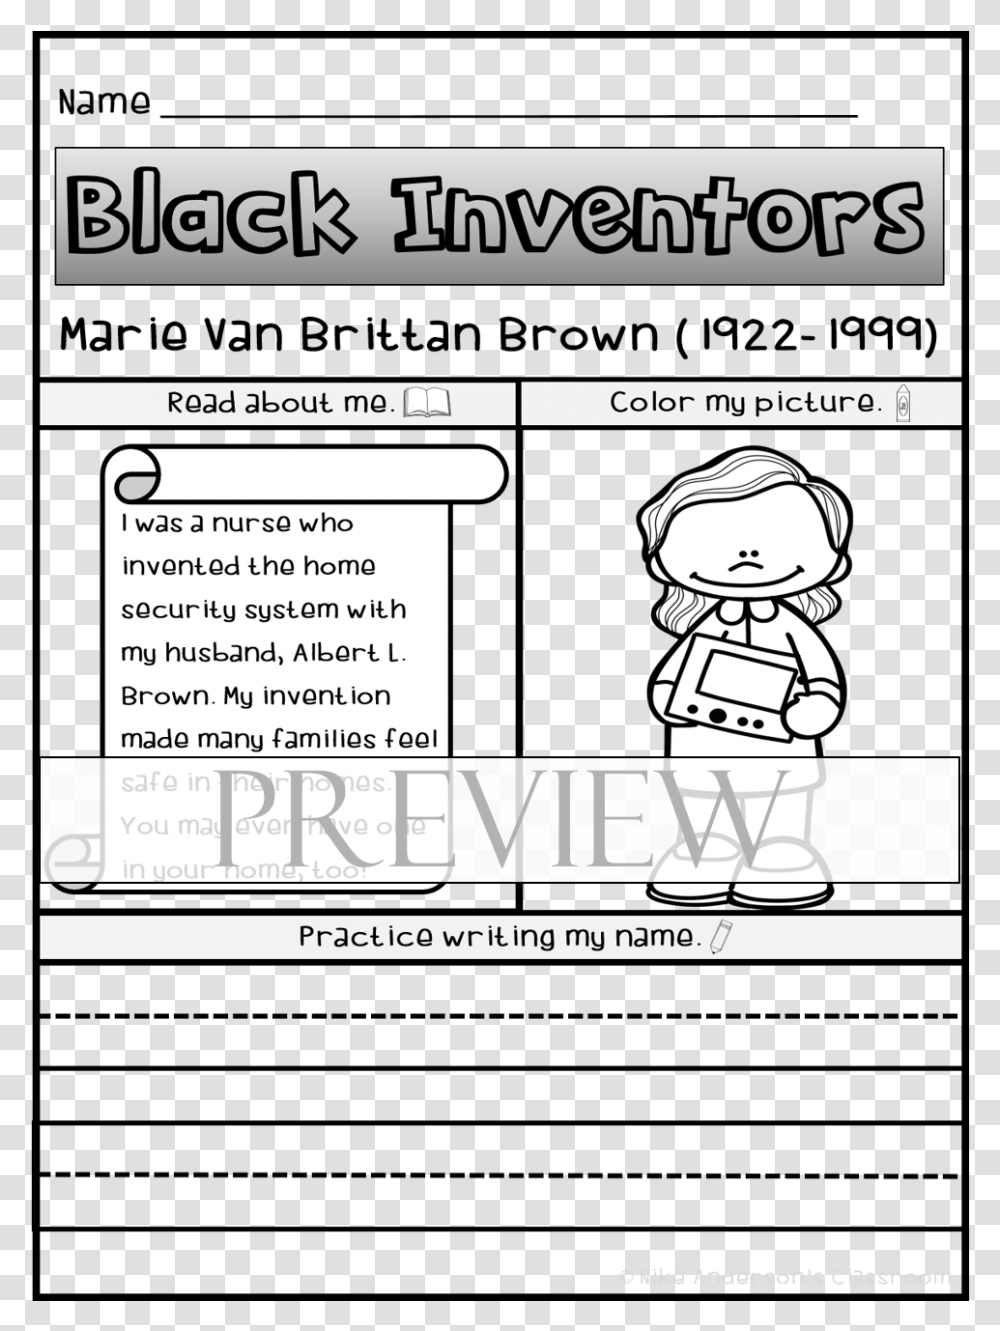 Marie Van Brittain Brown African American Inventor Cartoon, Word, Driving License, Document Transparent Png